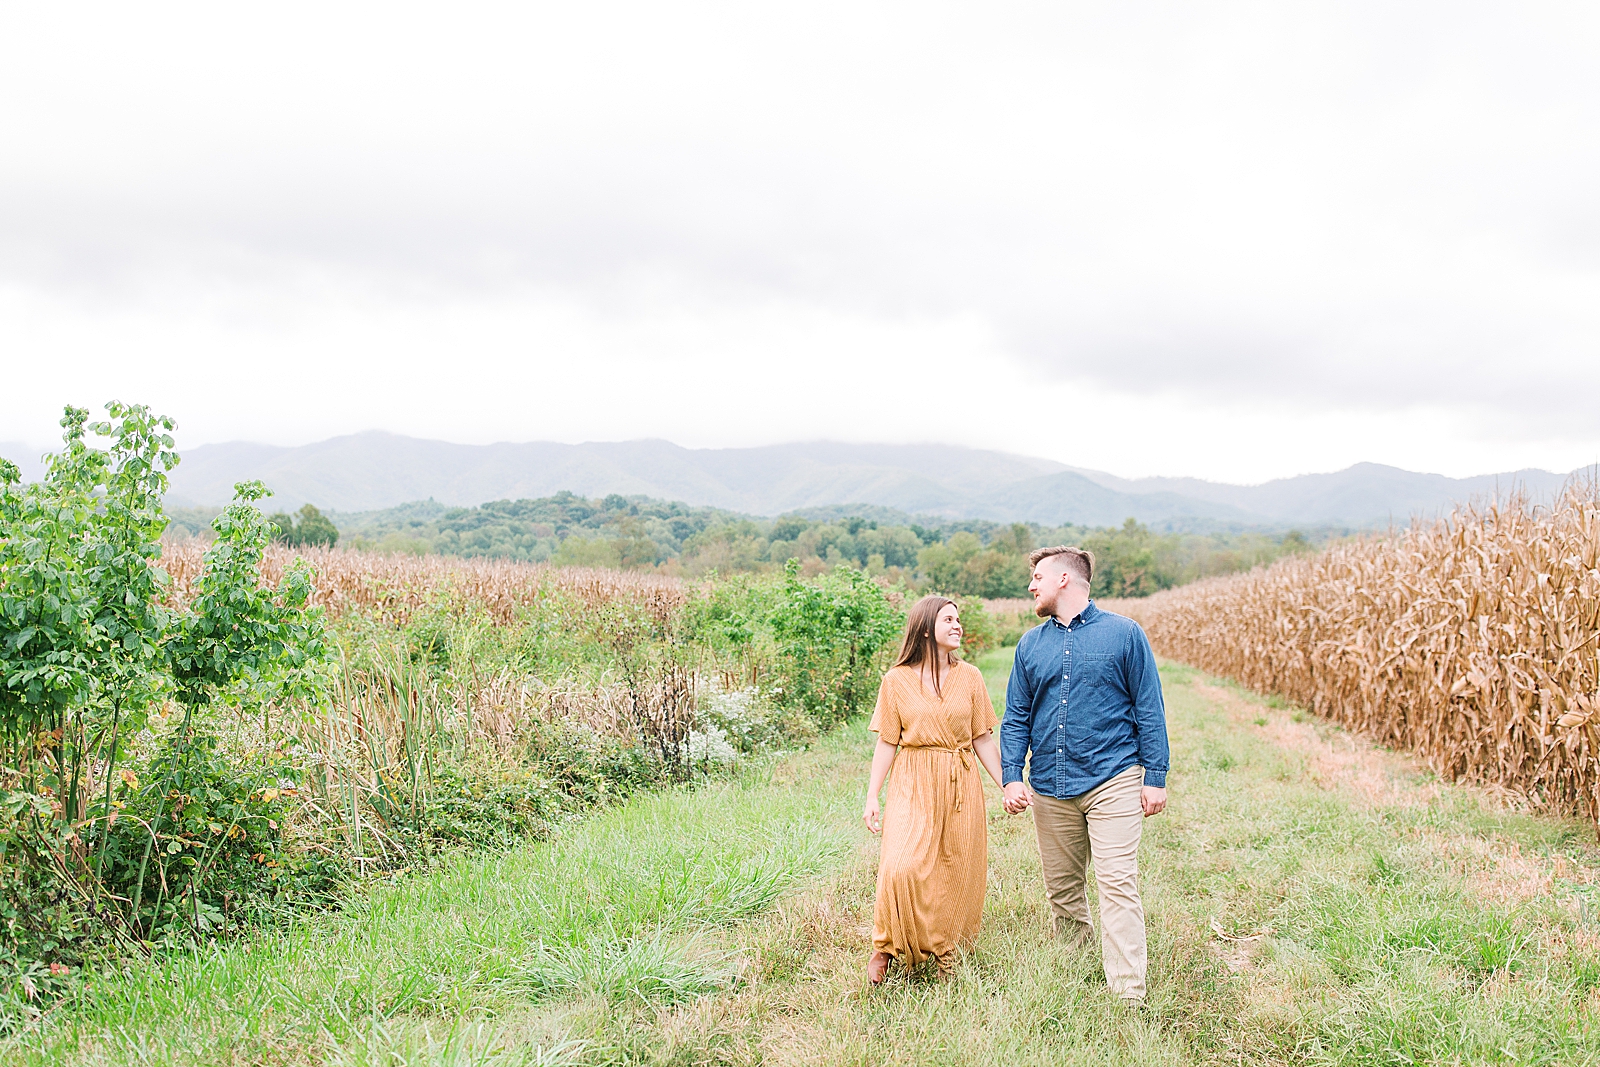  North Carolina Mountain Engagement Session Couple Walking through Field Photo